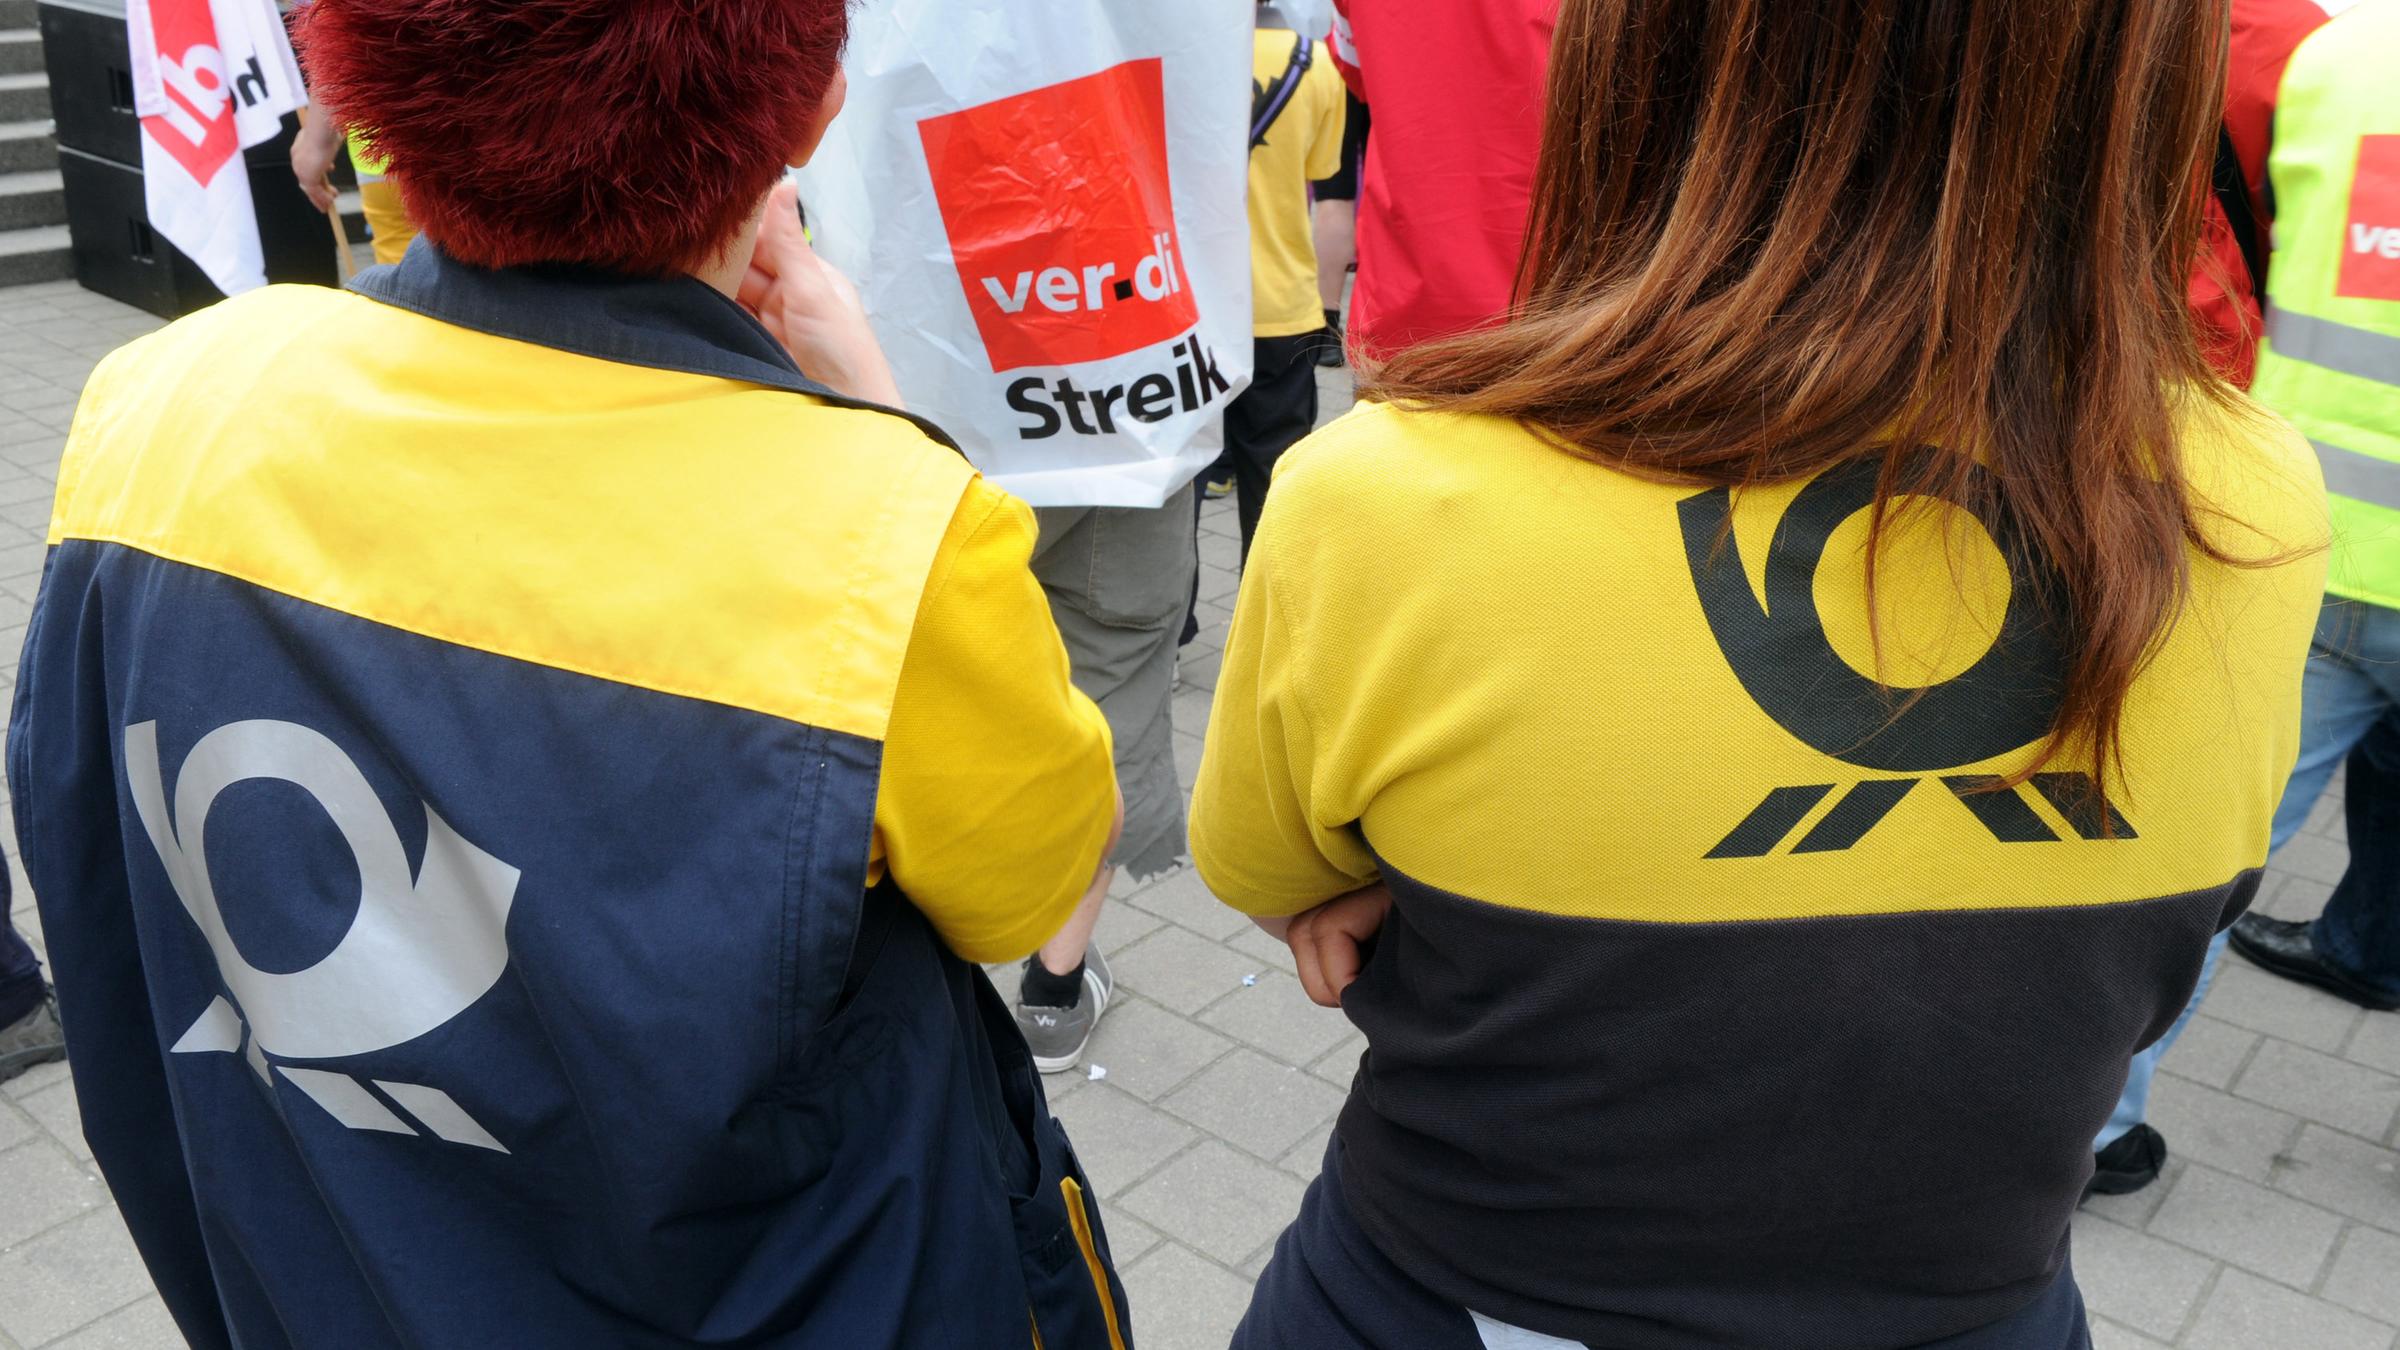 Tarifverhandlungen: IG Metall fordert Vier-Tage-Woche - ZDFheute